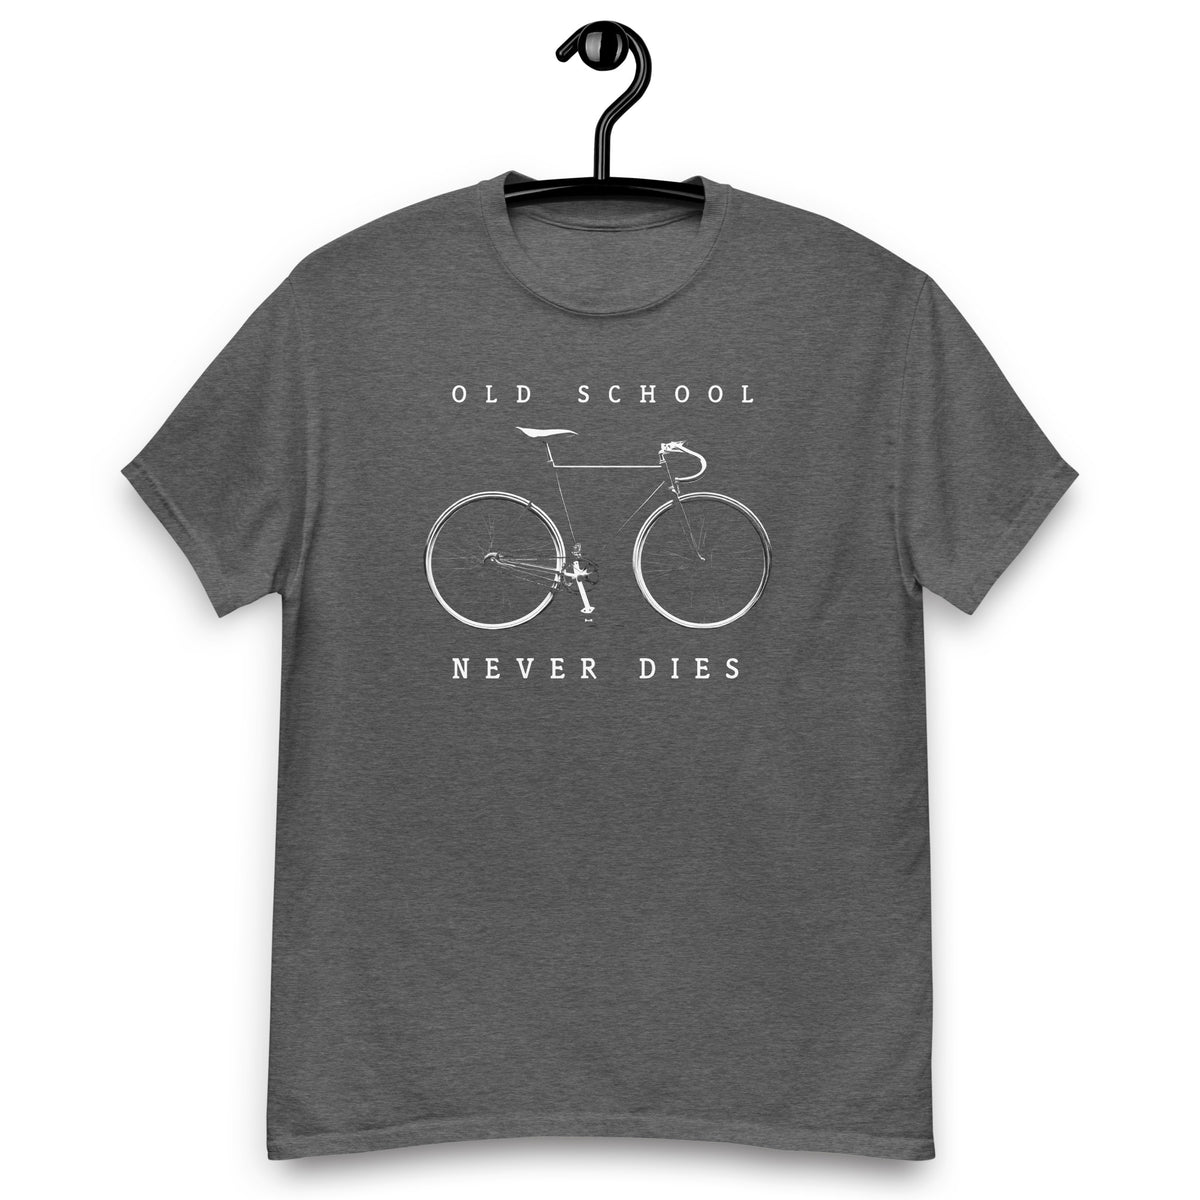 Fahrrad Shirts " Old School Never Dies"